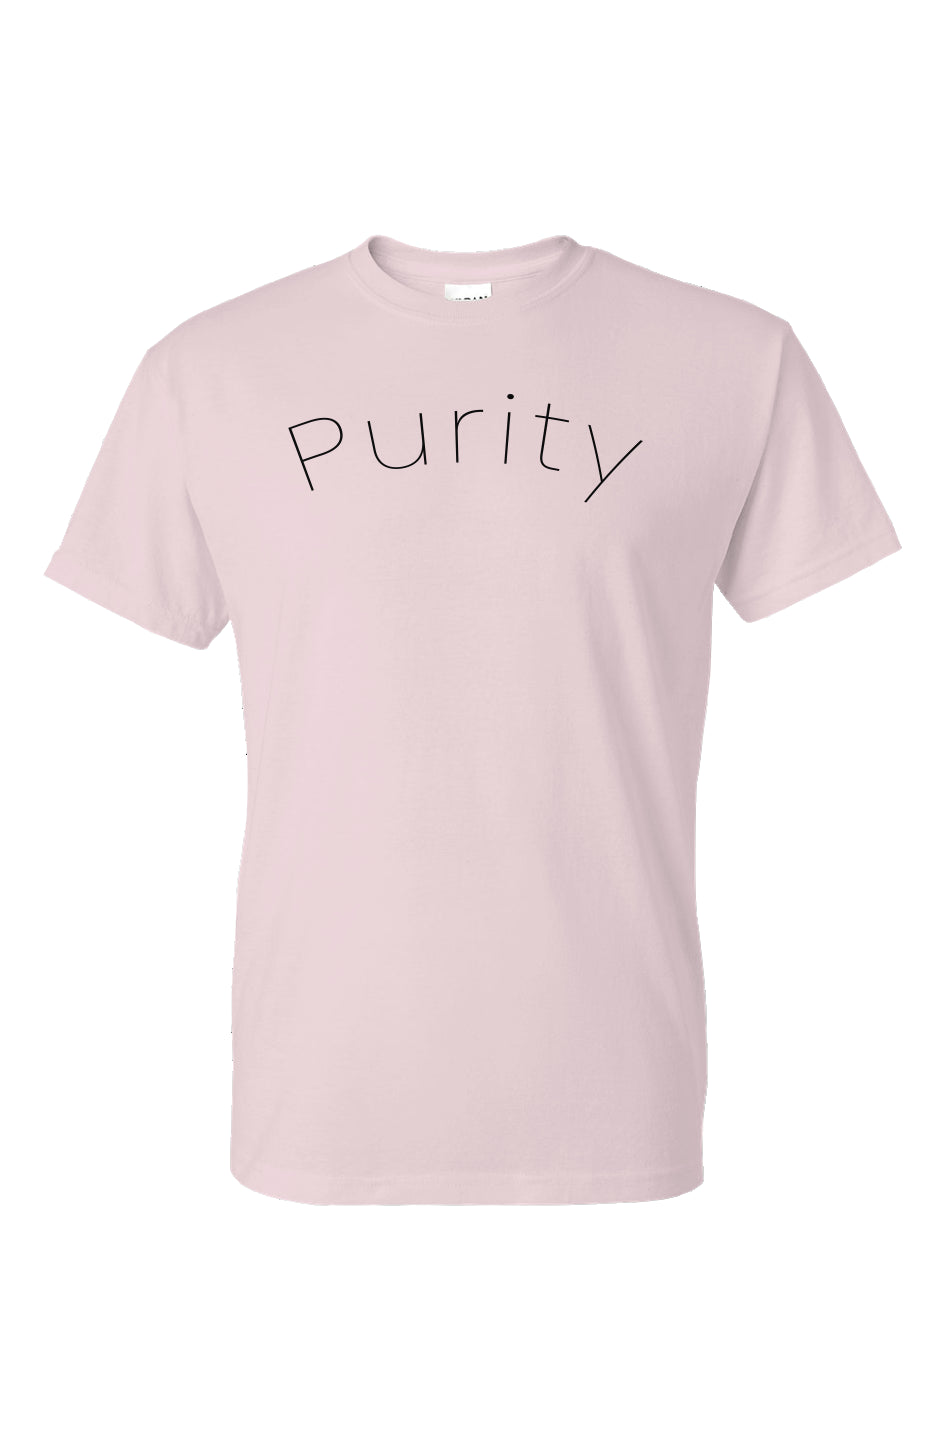 Purity dry blend short sleeve t shirt